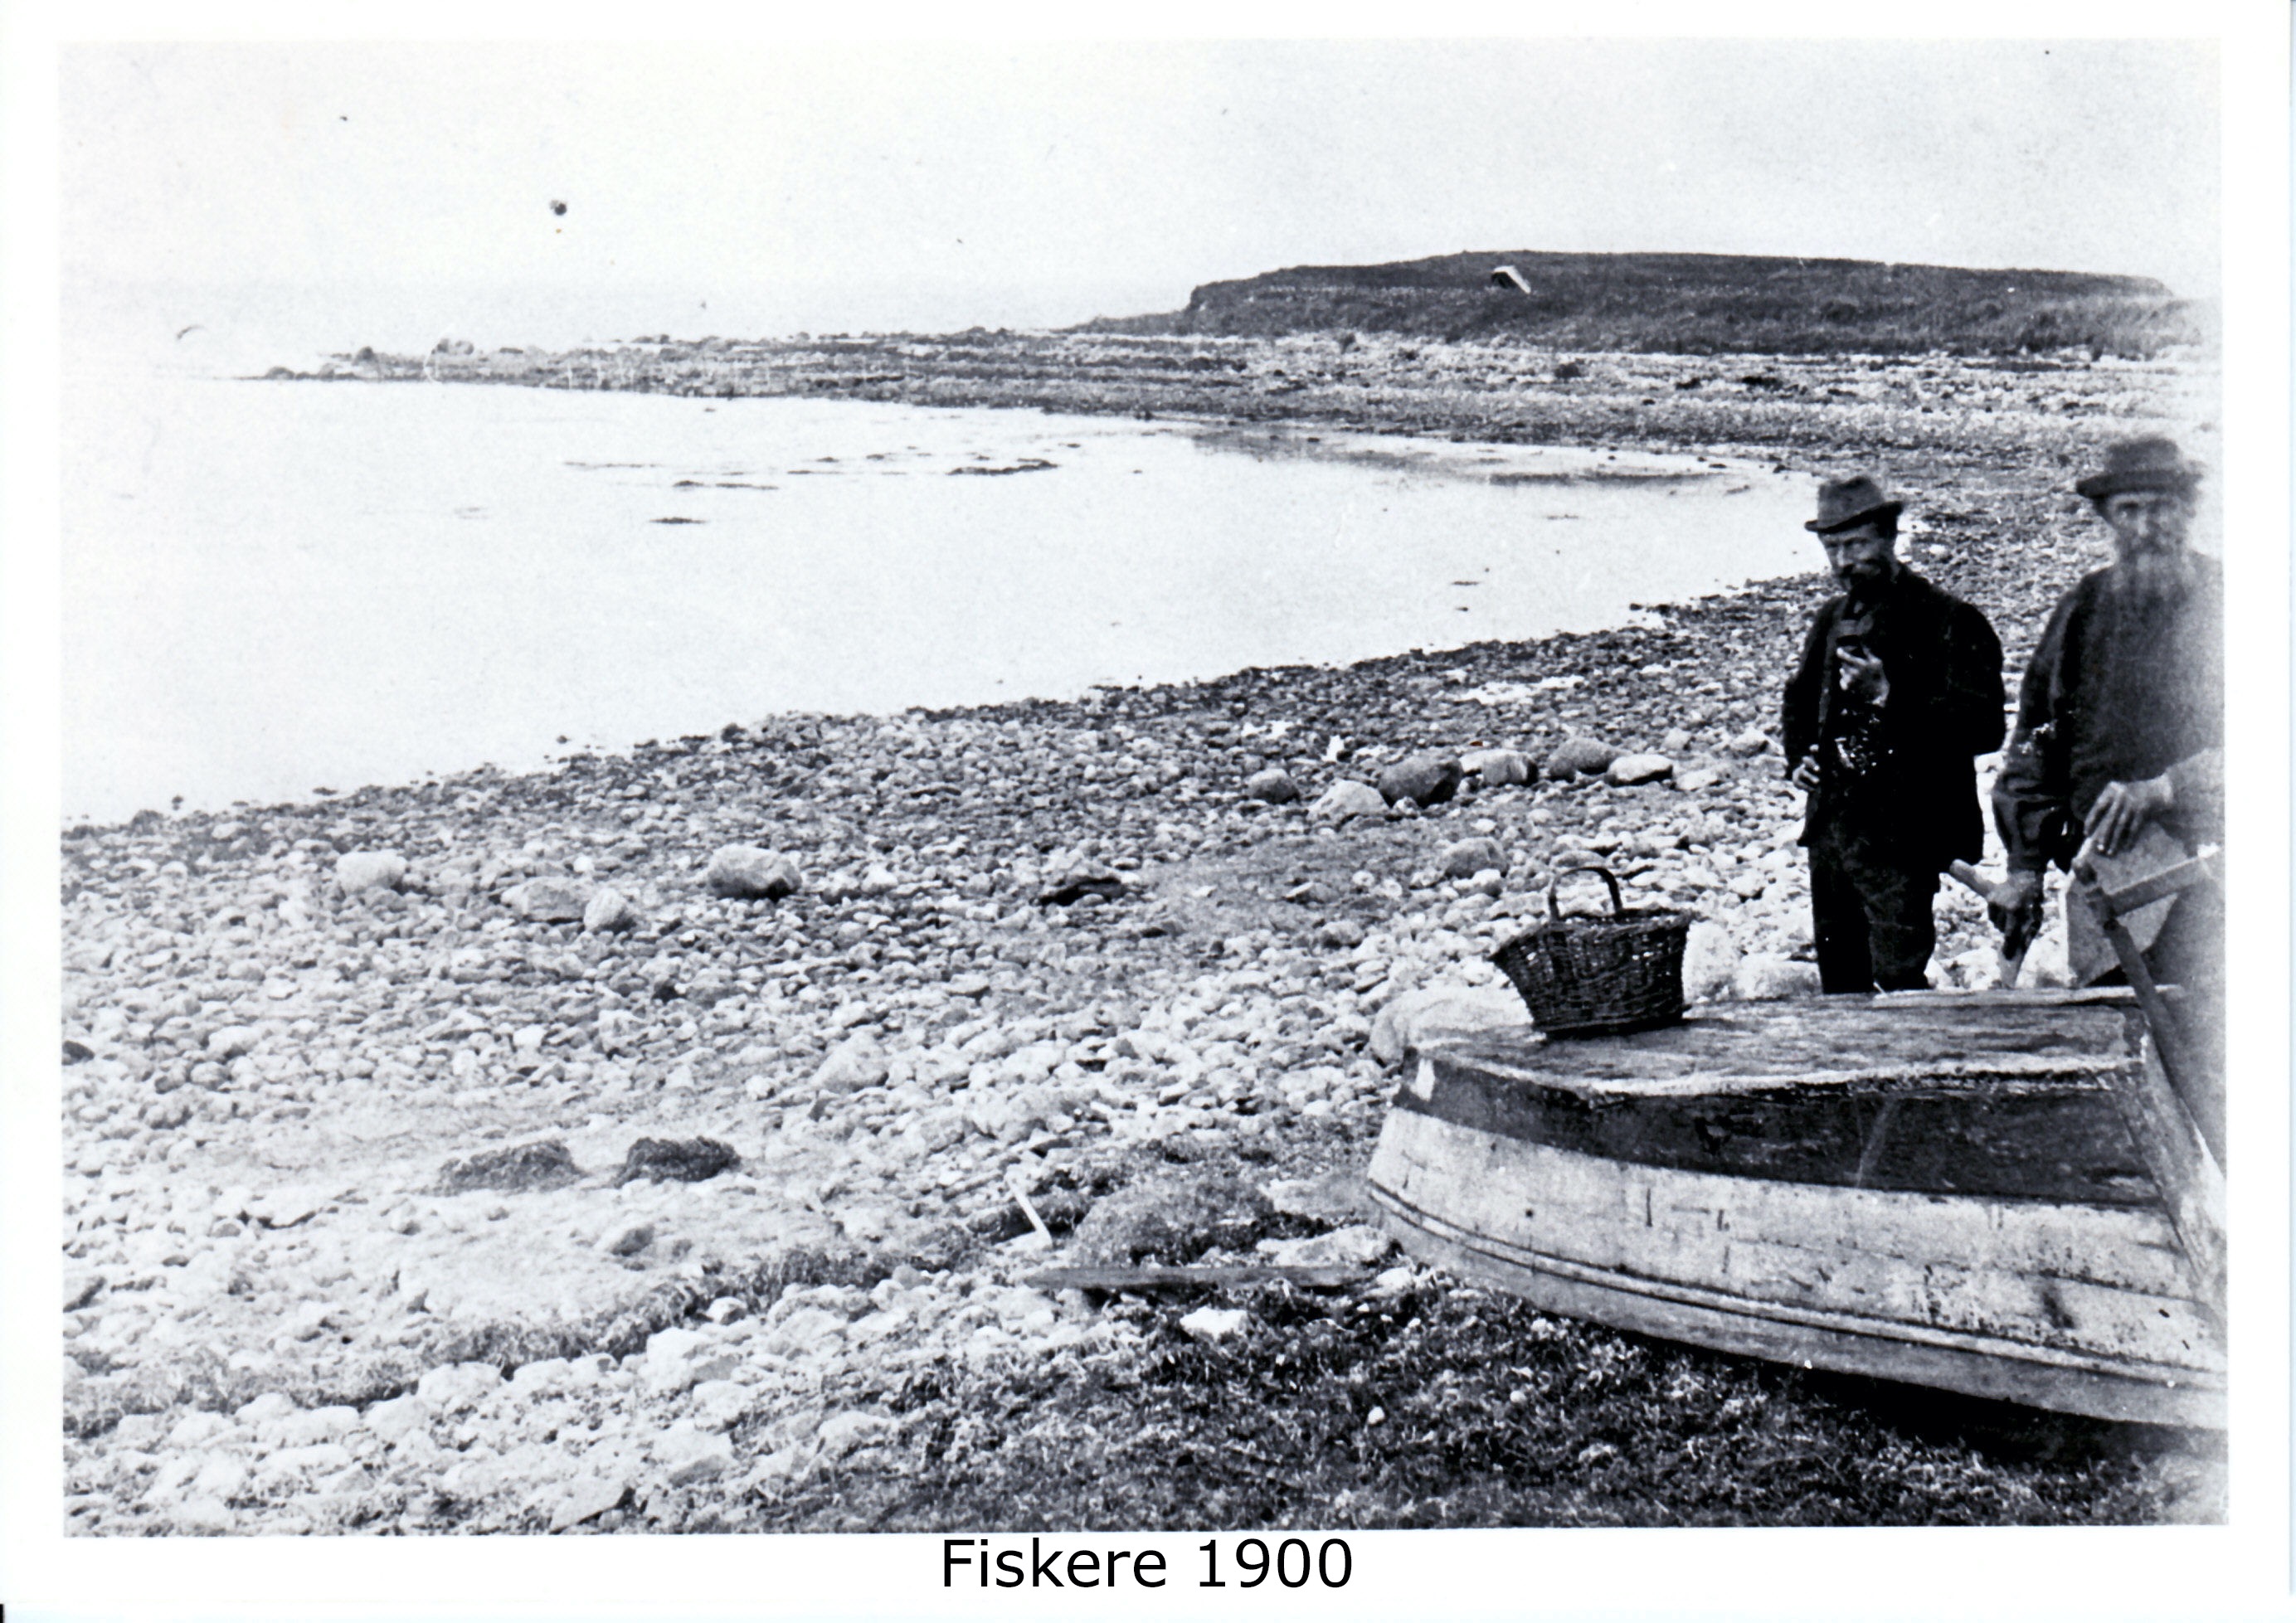 Fiskere 1900 